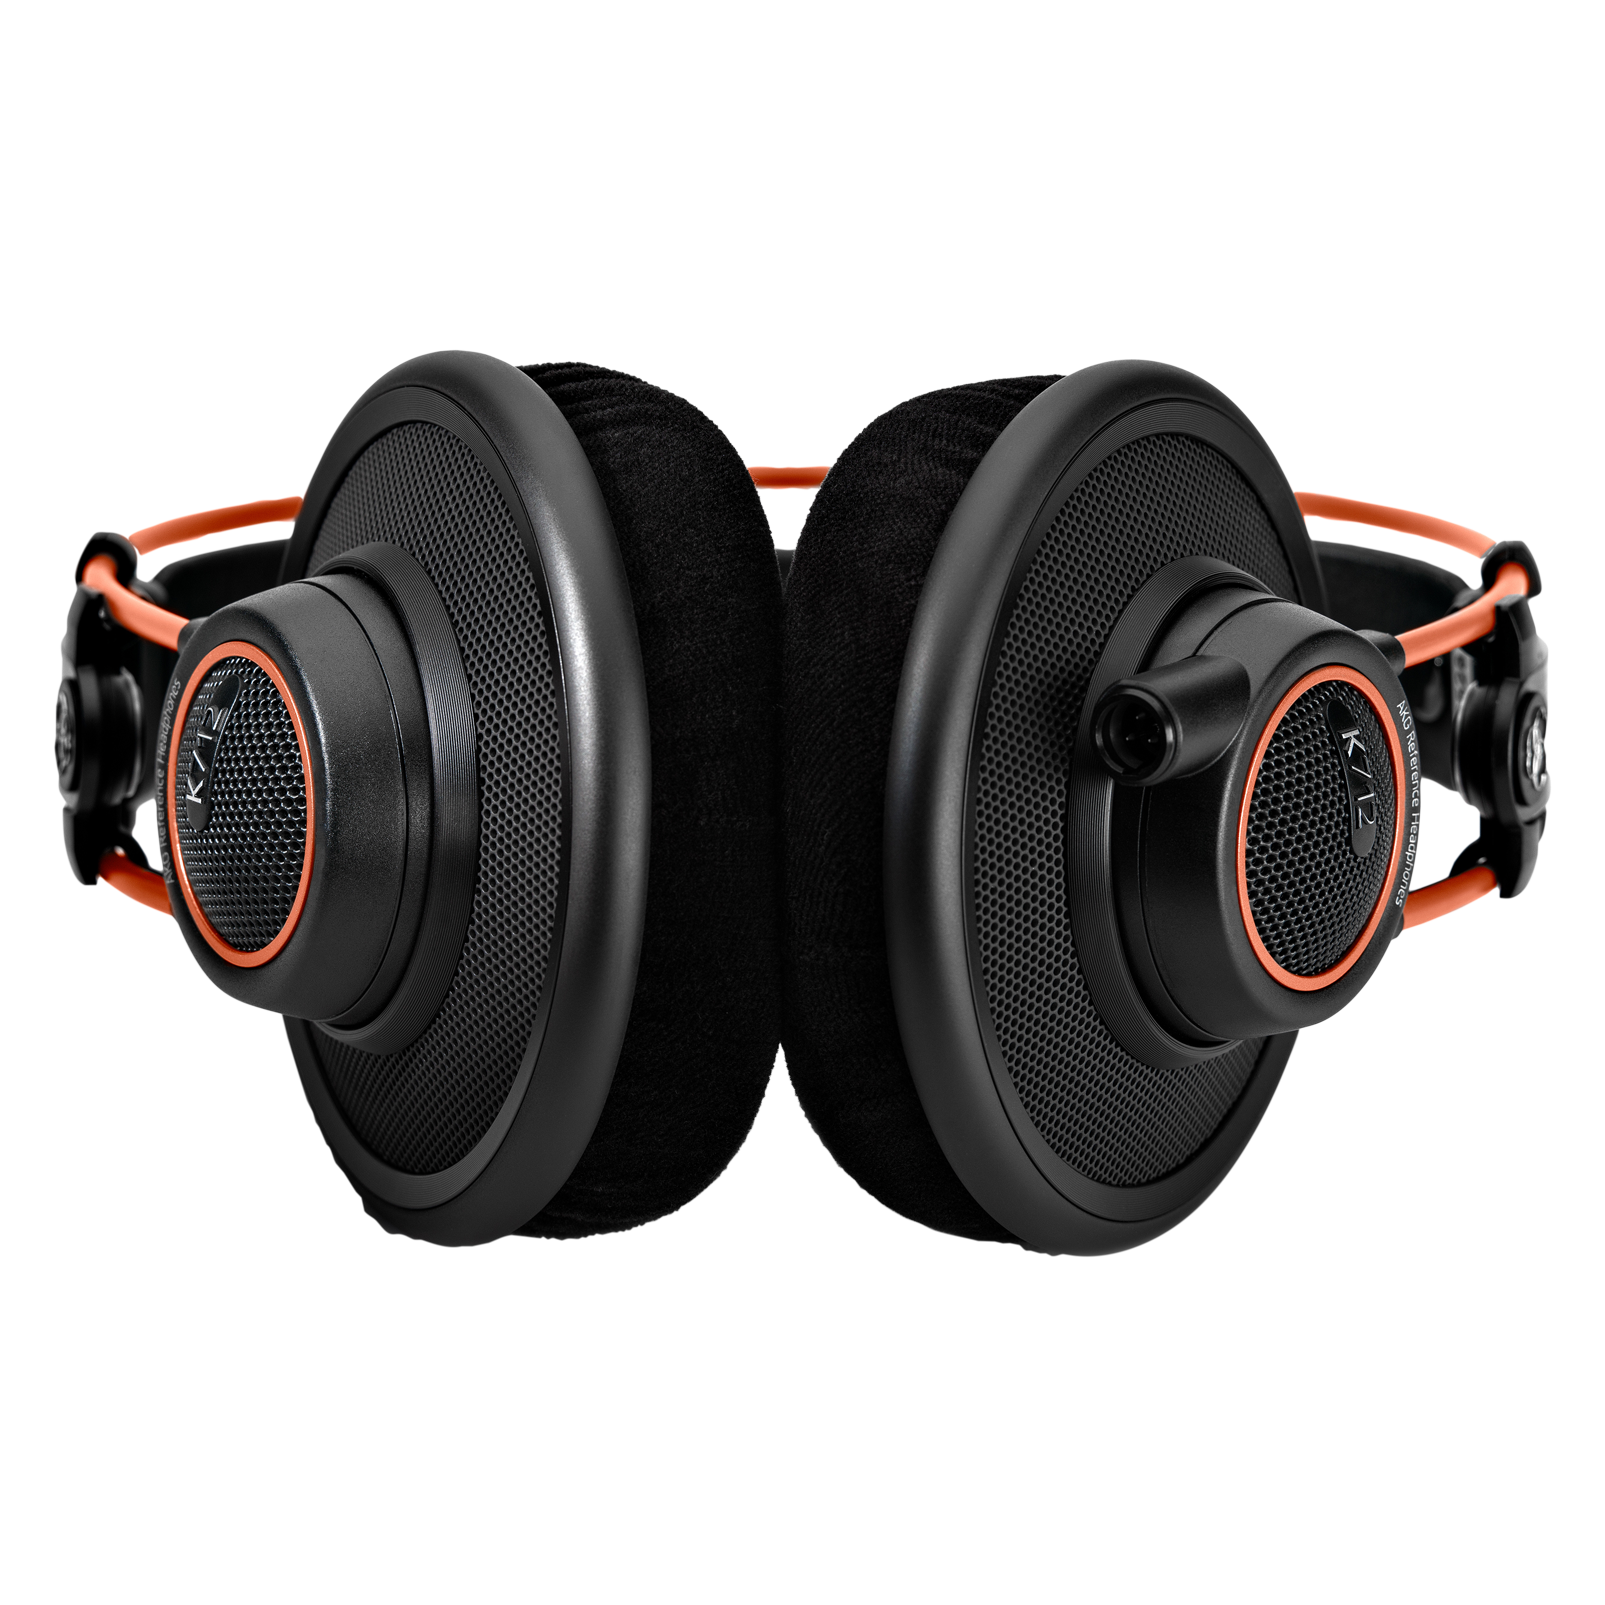 K712 PRO (B-Stock) - Black - Reference studio headphones - Detailshot 1